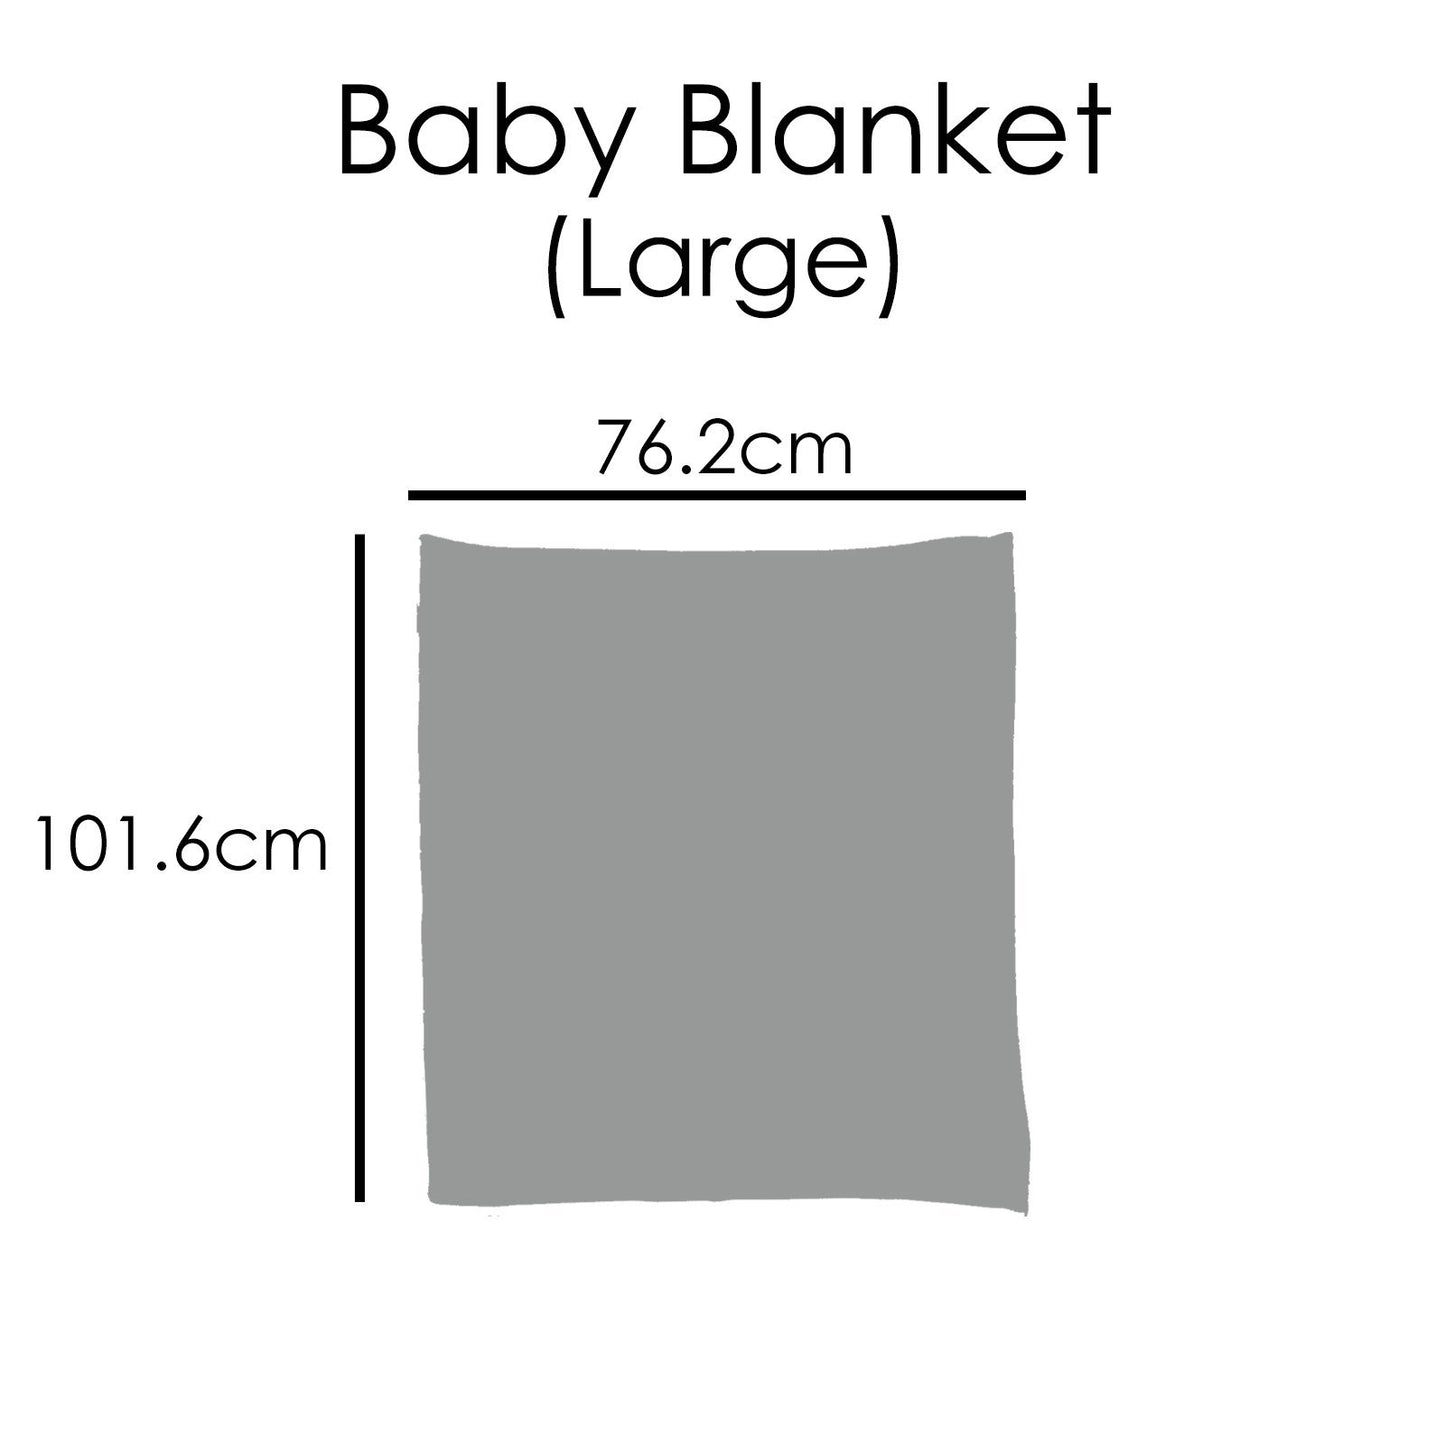 Personalised Alpaca Unicorn and Name Baby Blanket